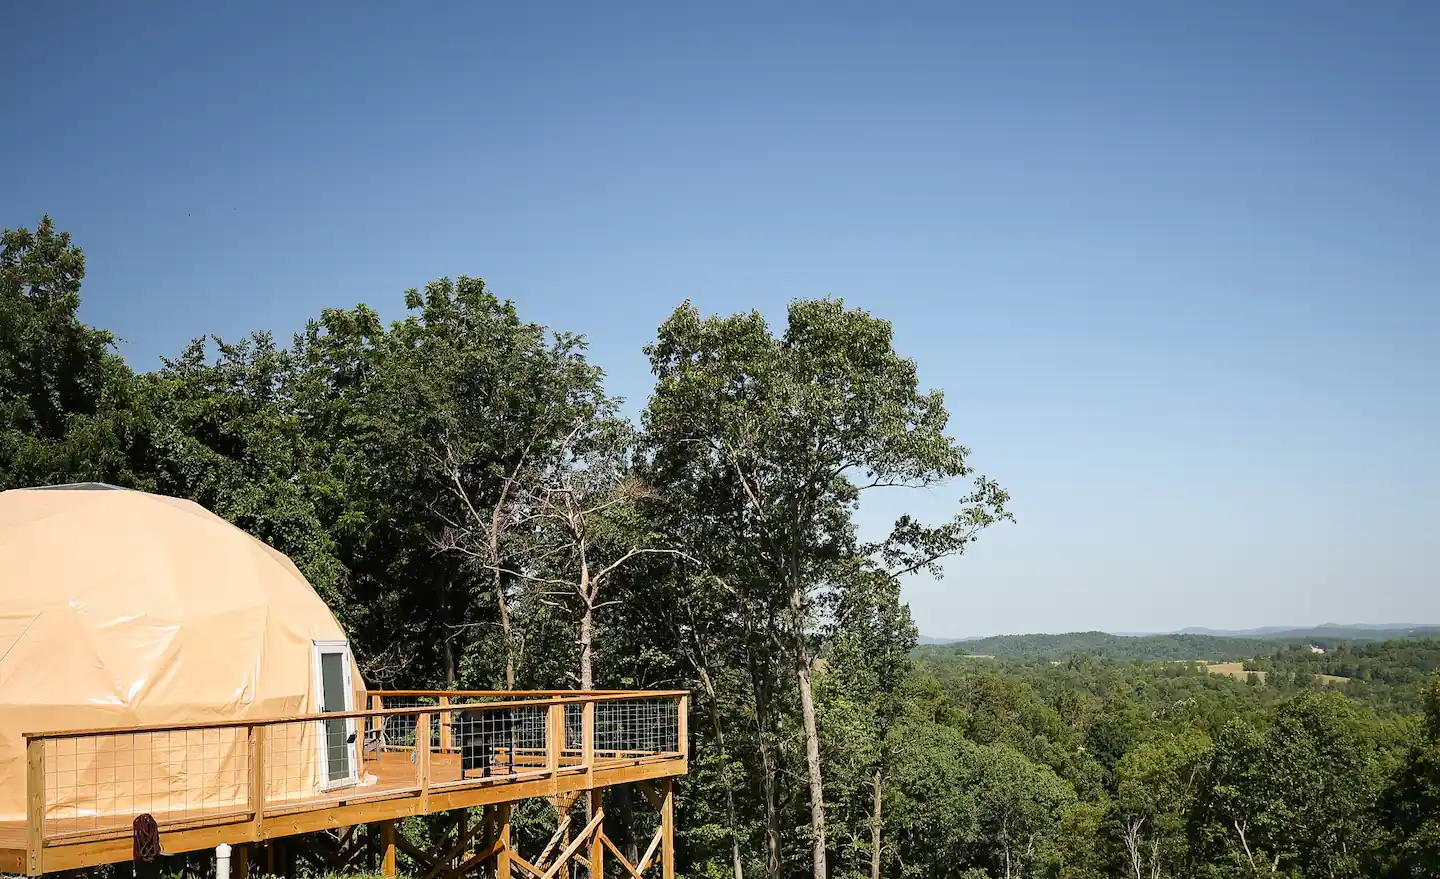 Dome Glamping Arkansas Airbnb